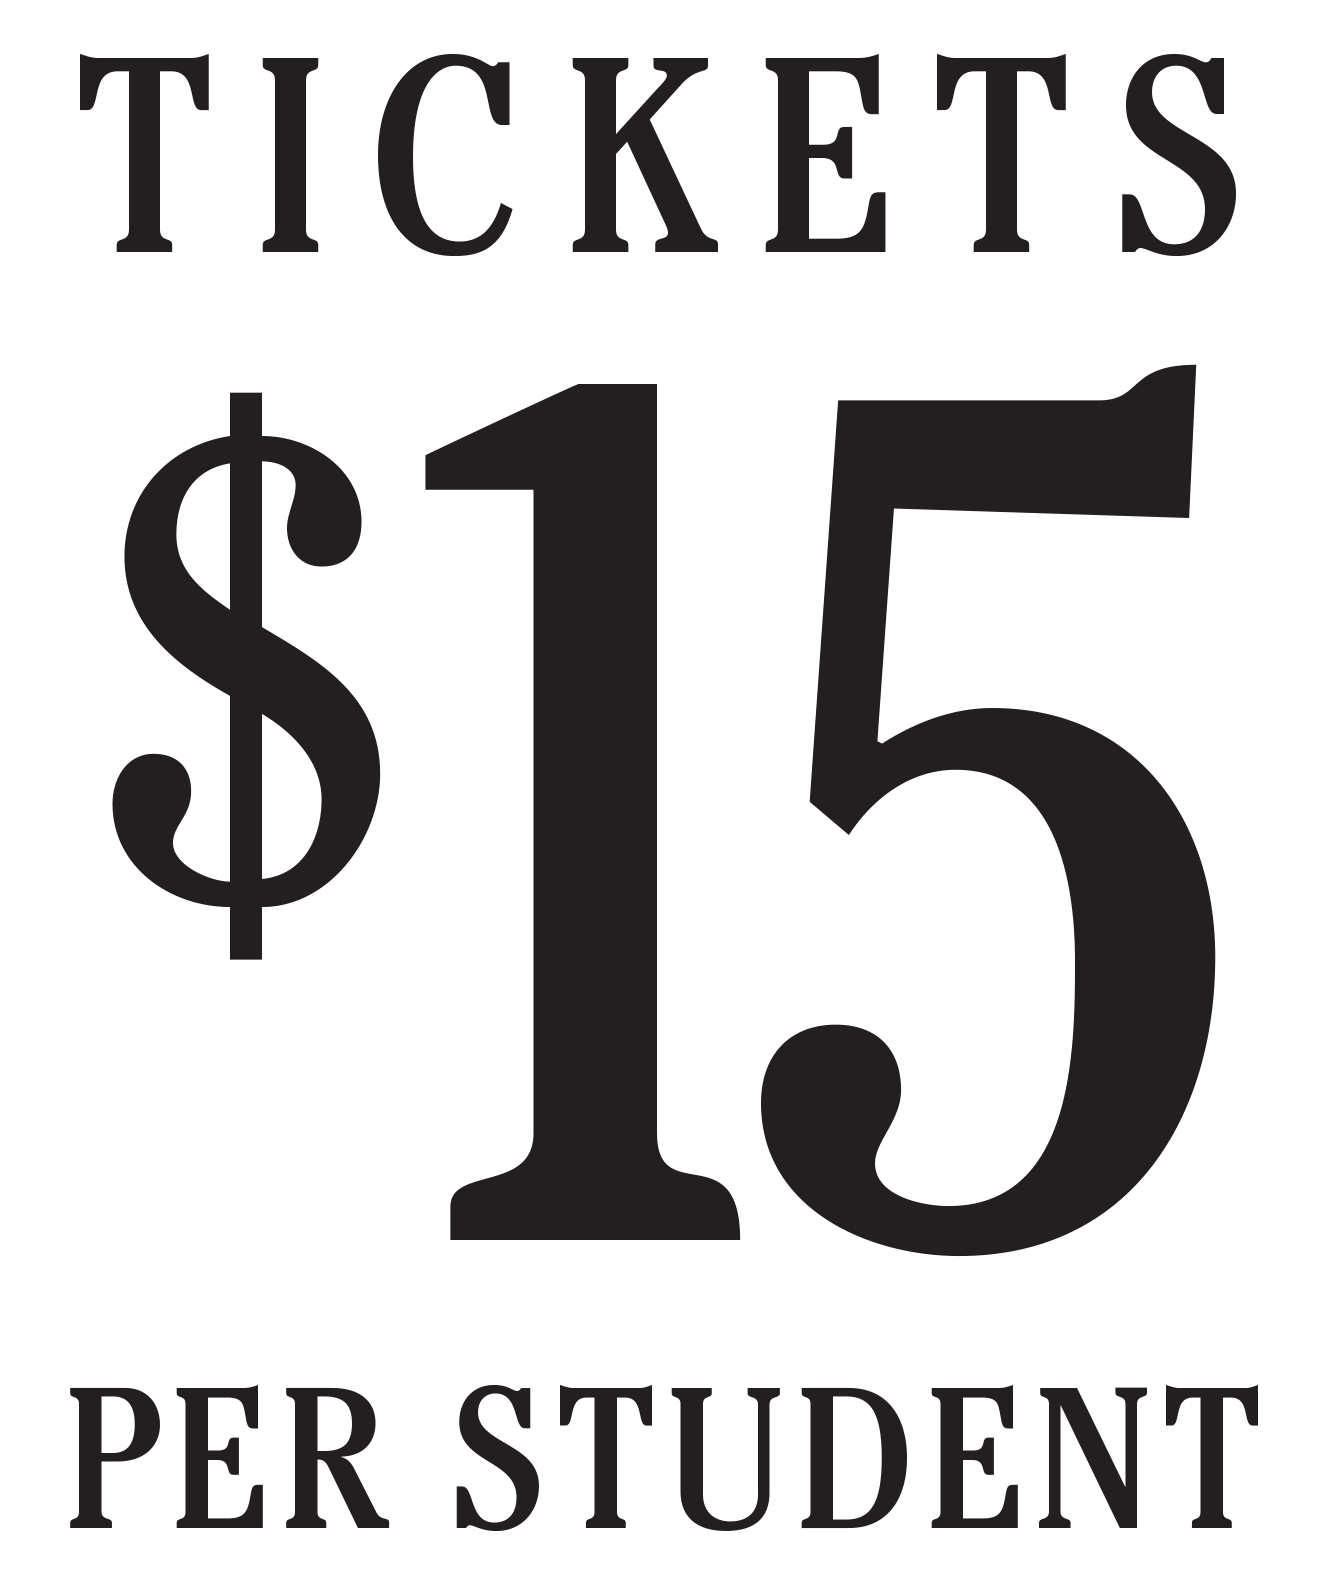 tickets $15 per student